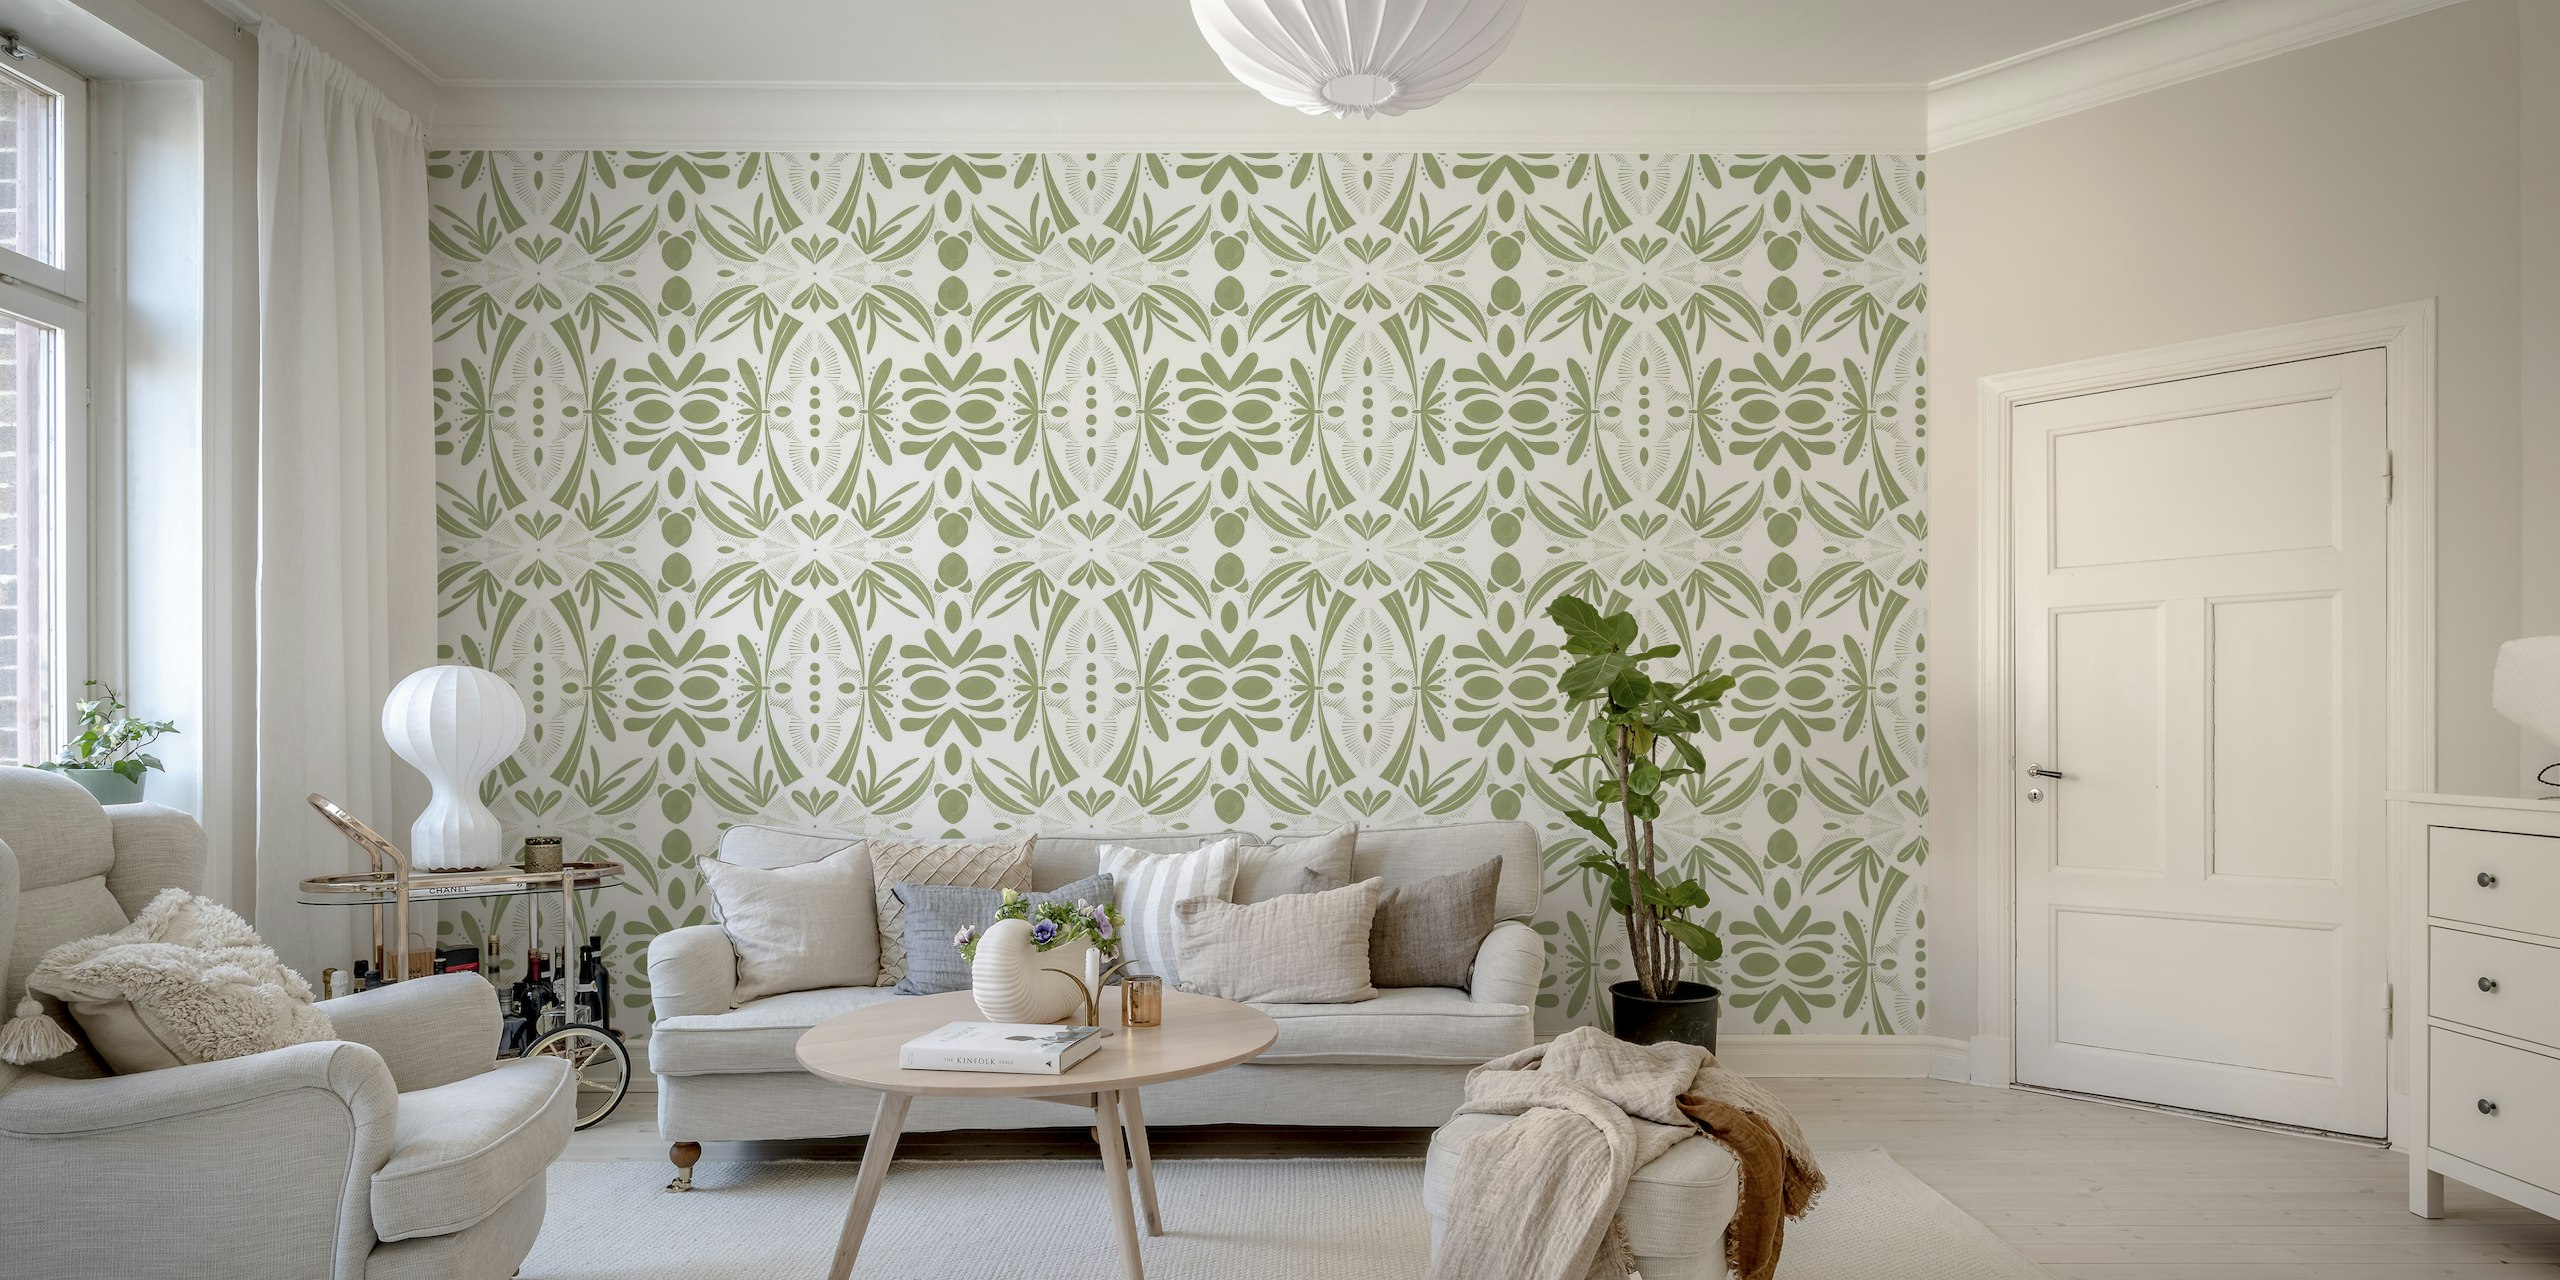 Green modern shapes tiles B wallpaper